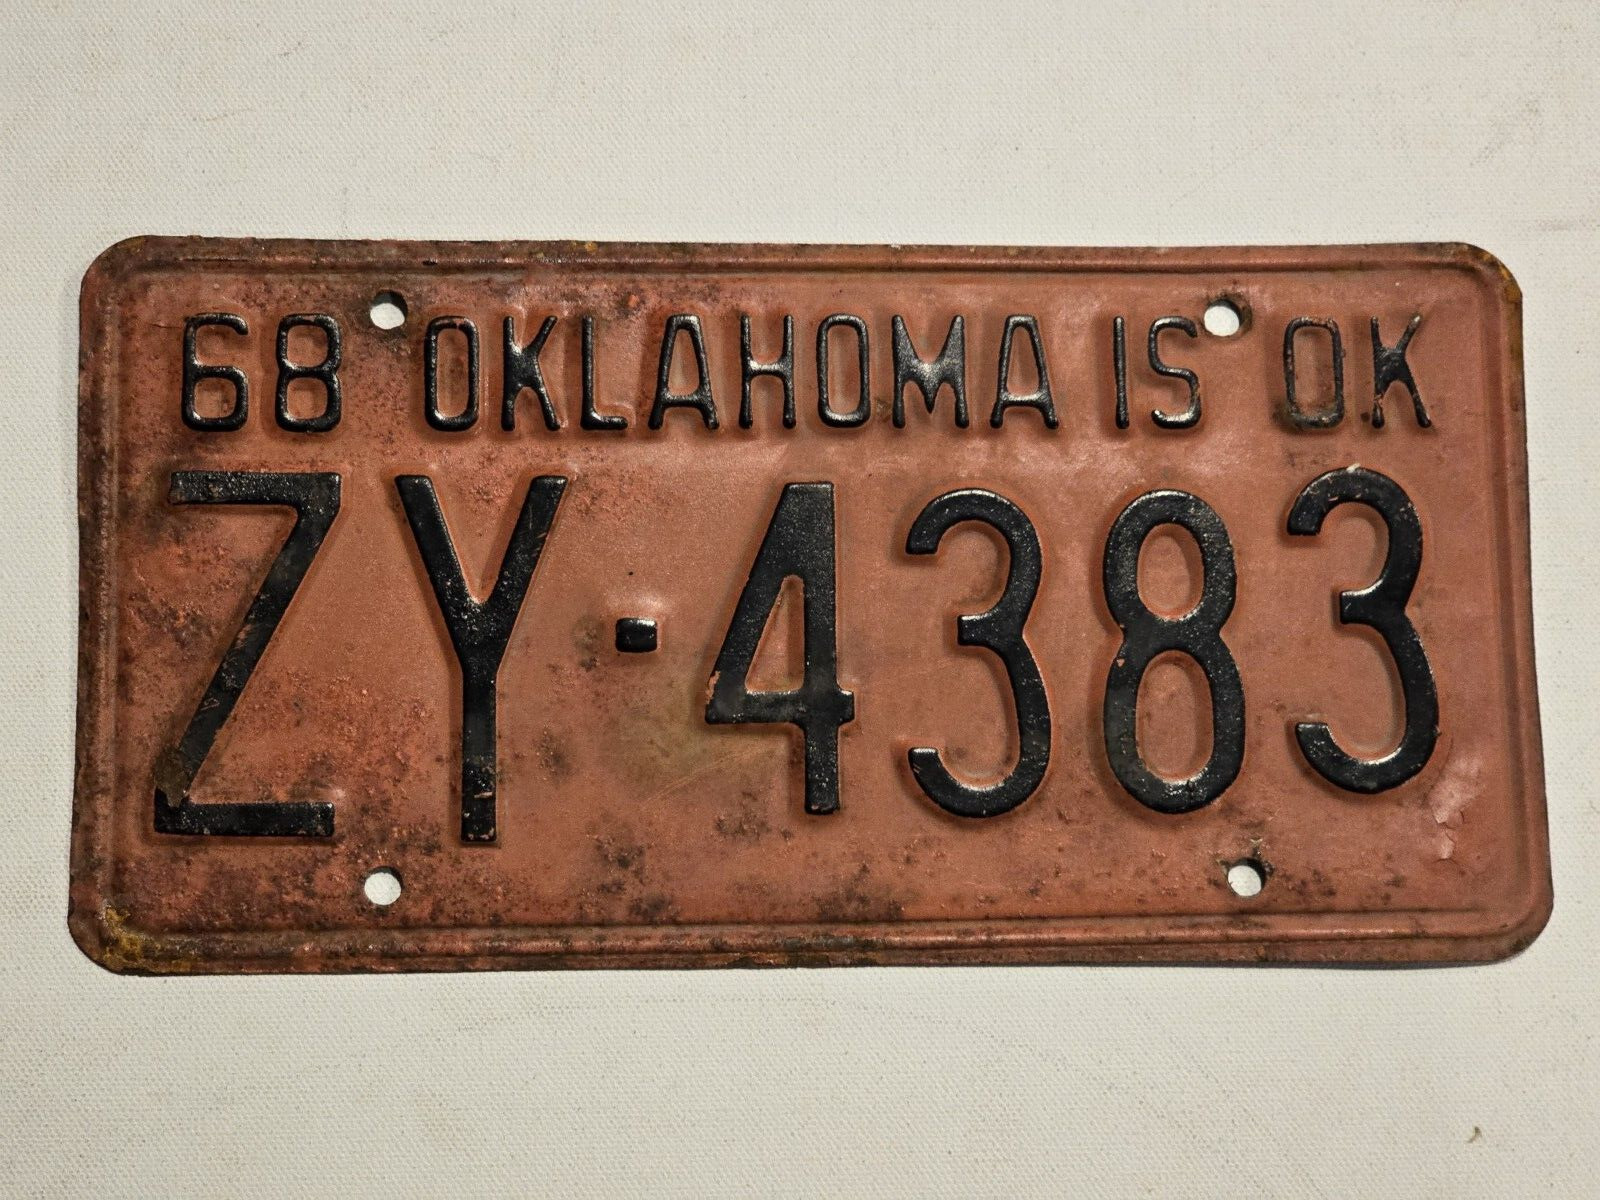 1968 Vintage License Plate #ZY-4383 Oklahoma IS OK Tag Vintage Garage-Man Cave